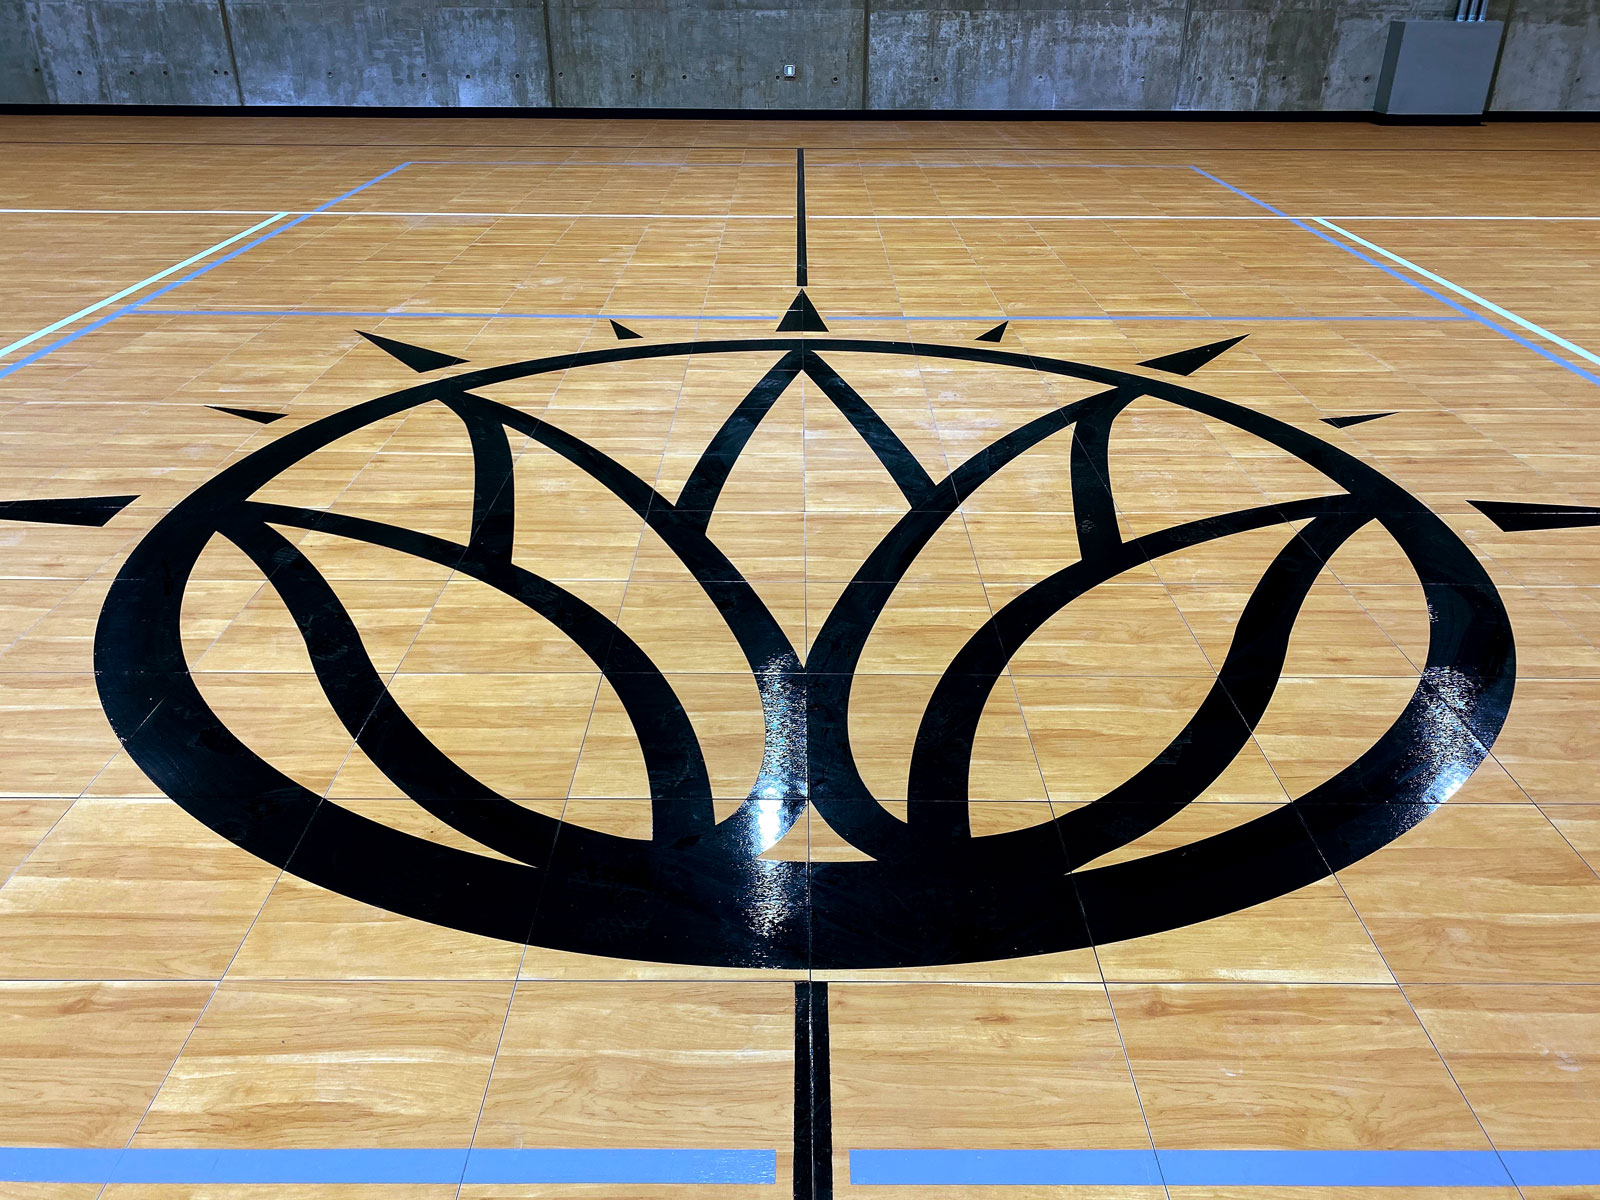 The custom Soleil Lofts logo on the court.